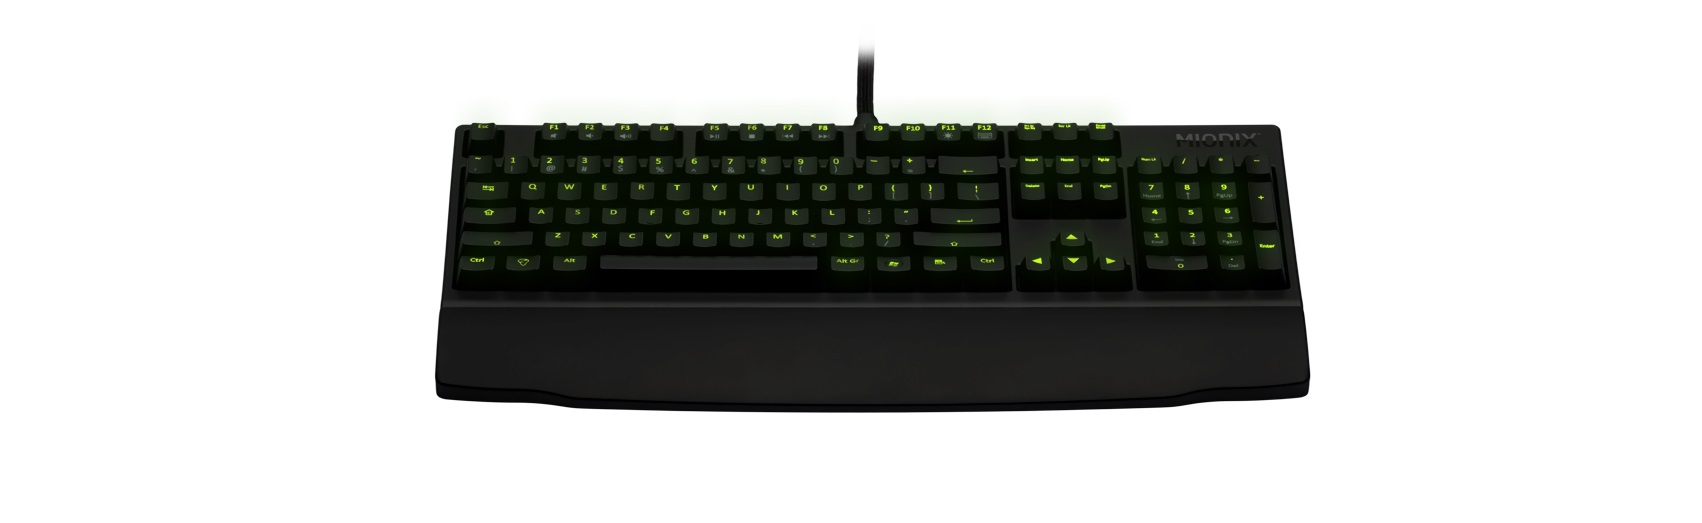 Keyboard Mionix Zibal Mechanical Cherry MX Black có layout cơ bản dễ sử dụng